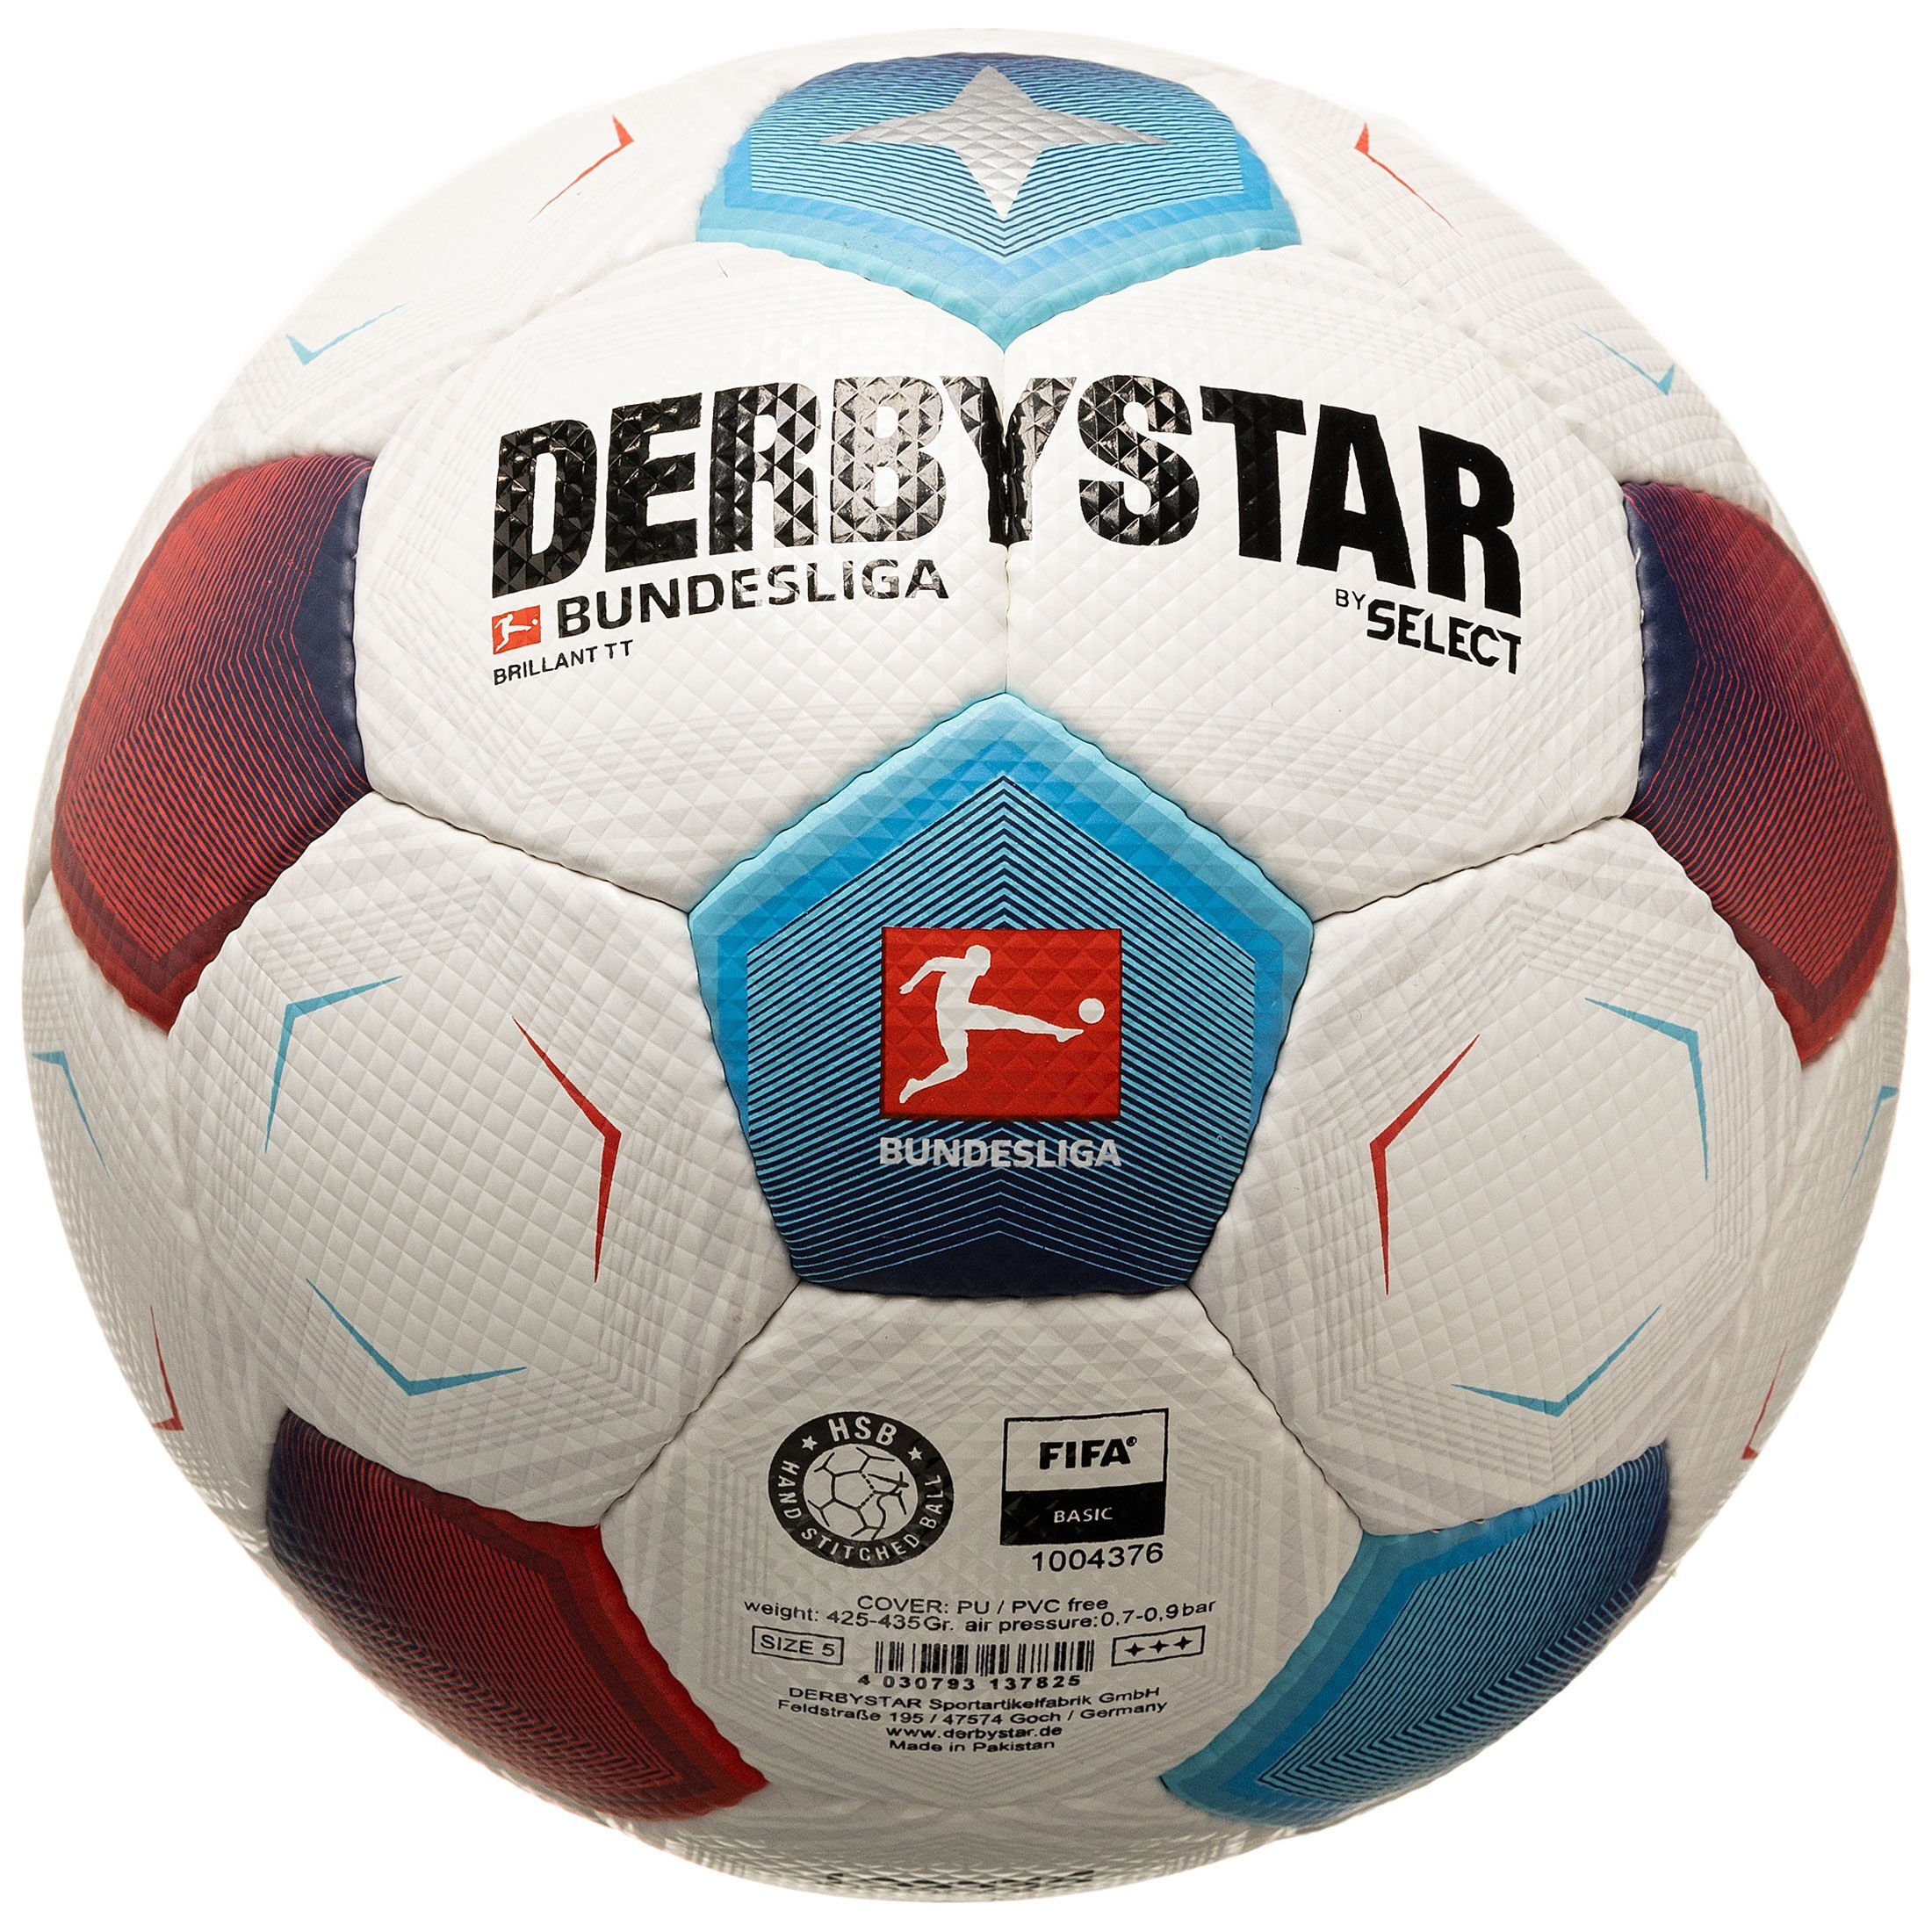 Derbystar Fußball Bundesliga Bundesliga Brillant TT v23 Fußball,  High-Visibility-Farben für Sichtbarkeit | Fußbälle